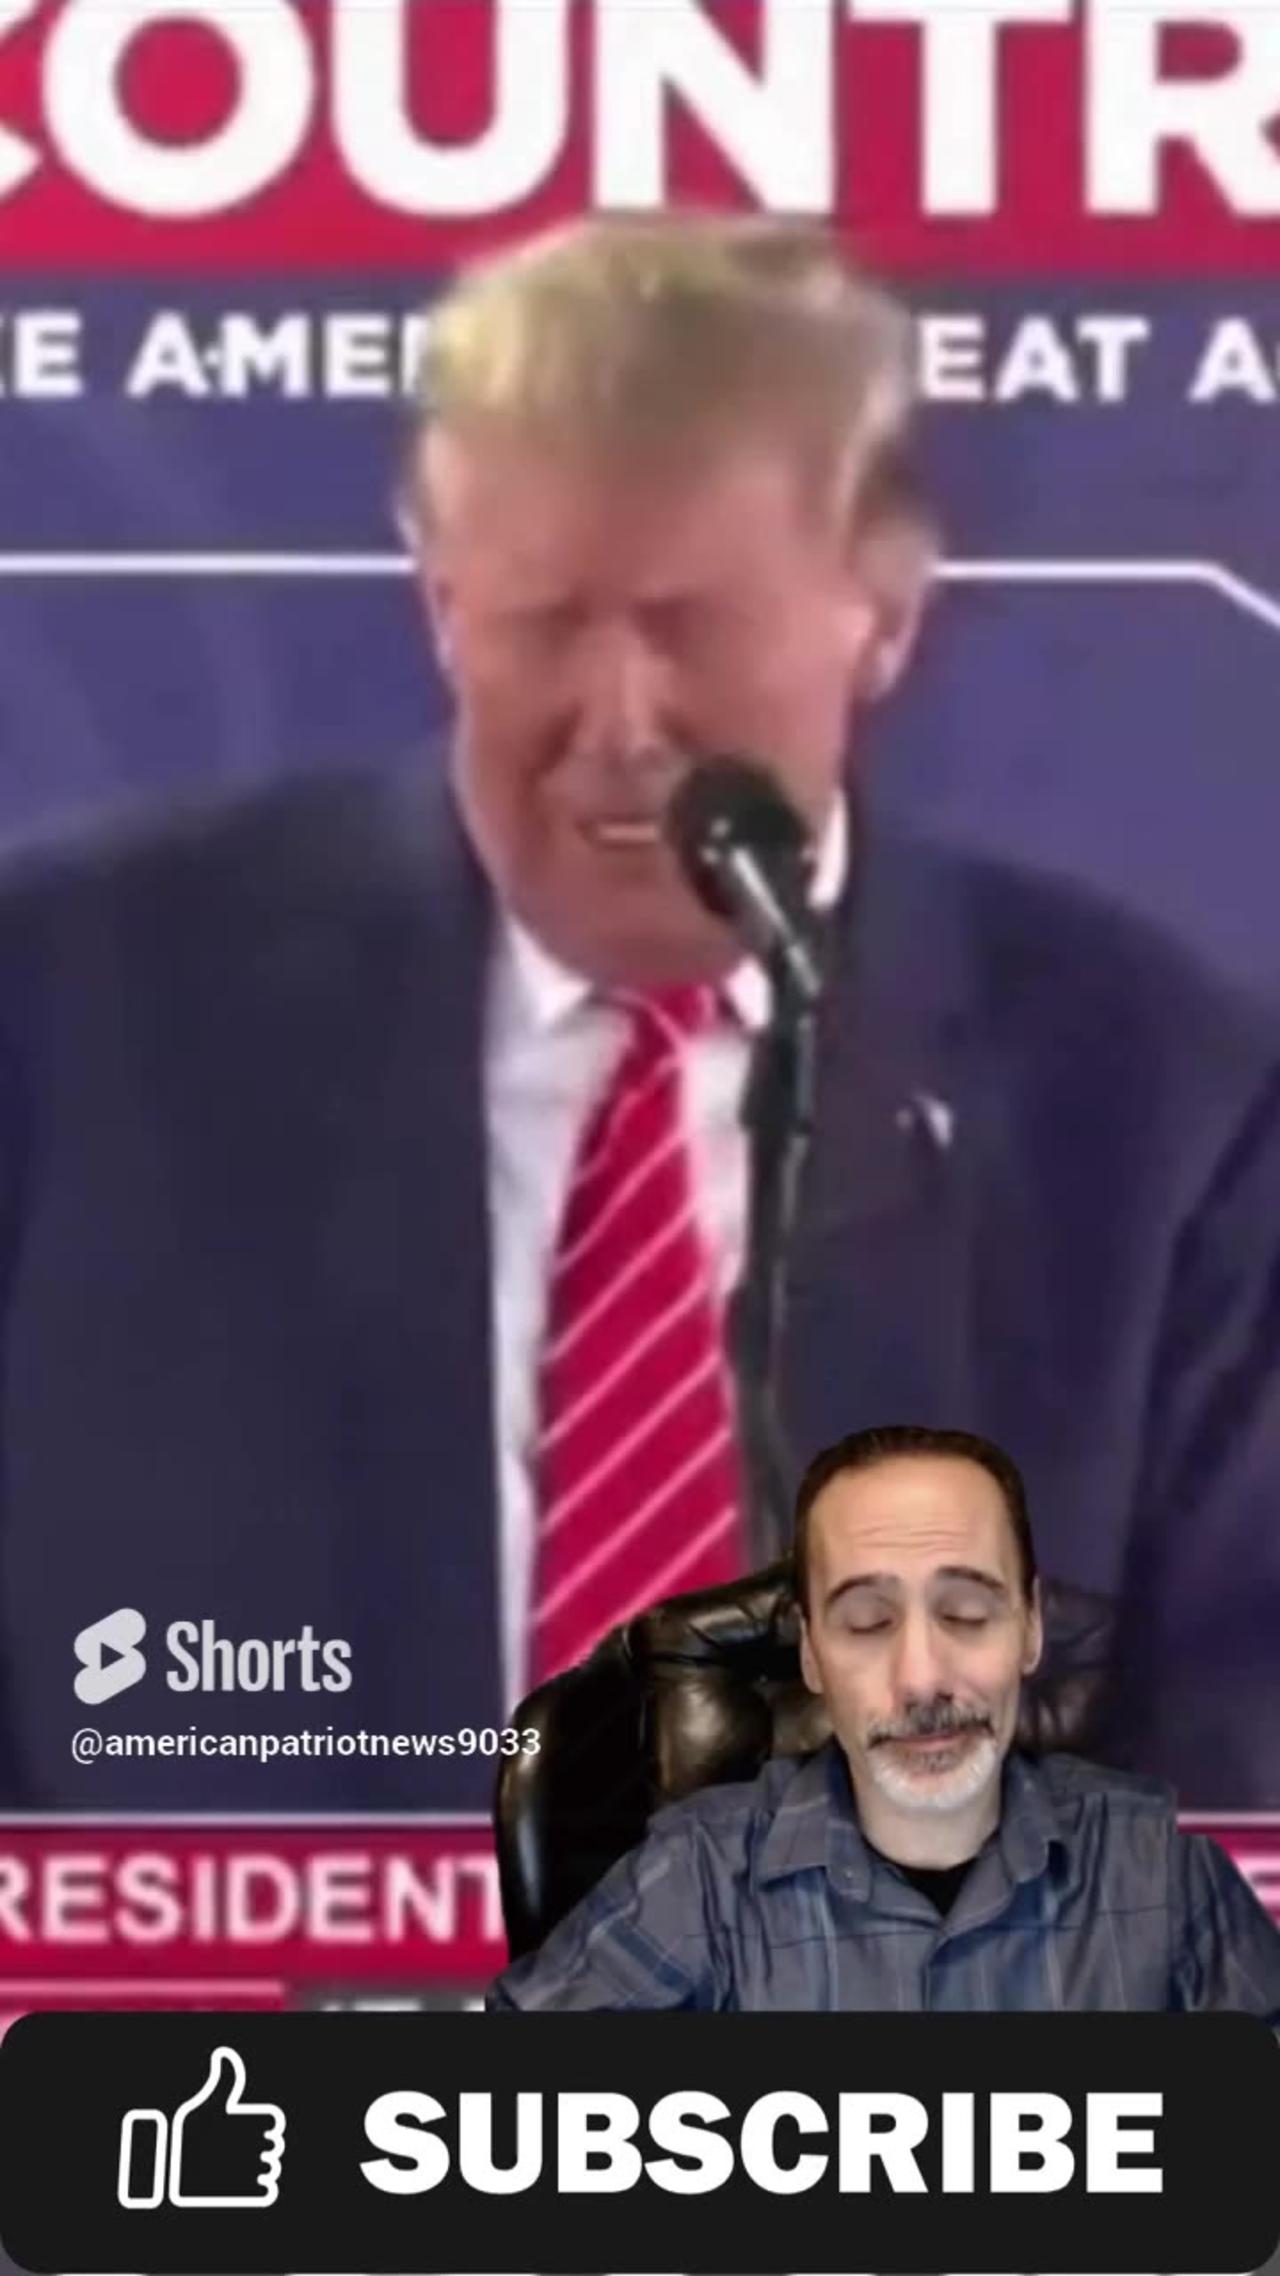 Trump imitating Biden holding a “press conference” is hilarious  #donaldtrump #comedy #joebiden